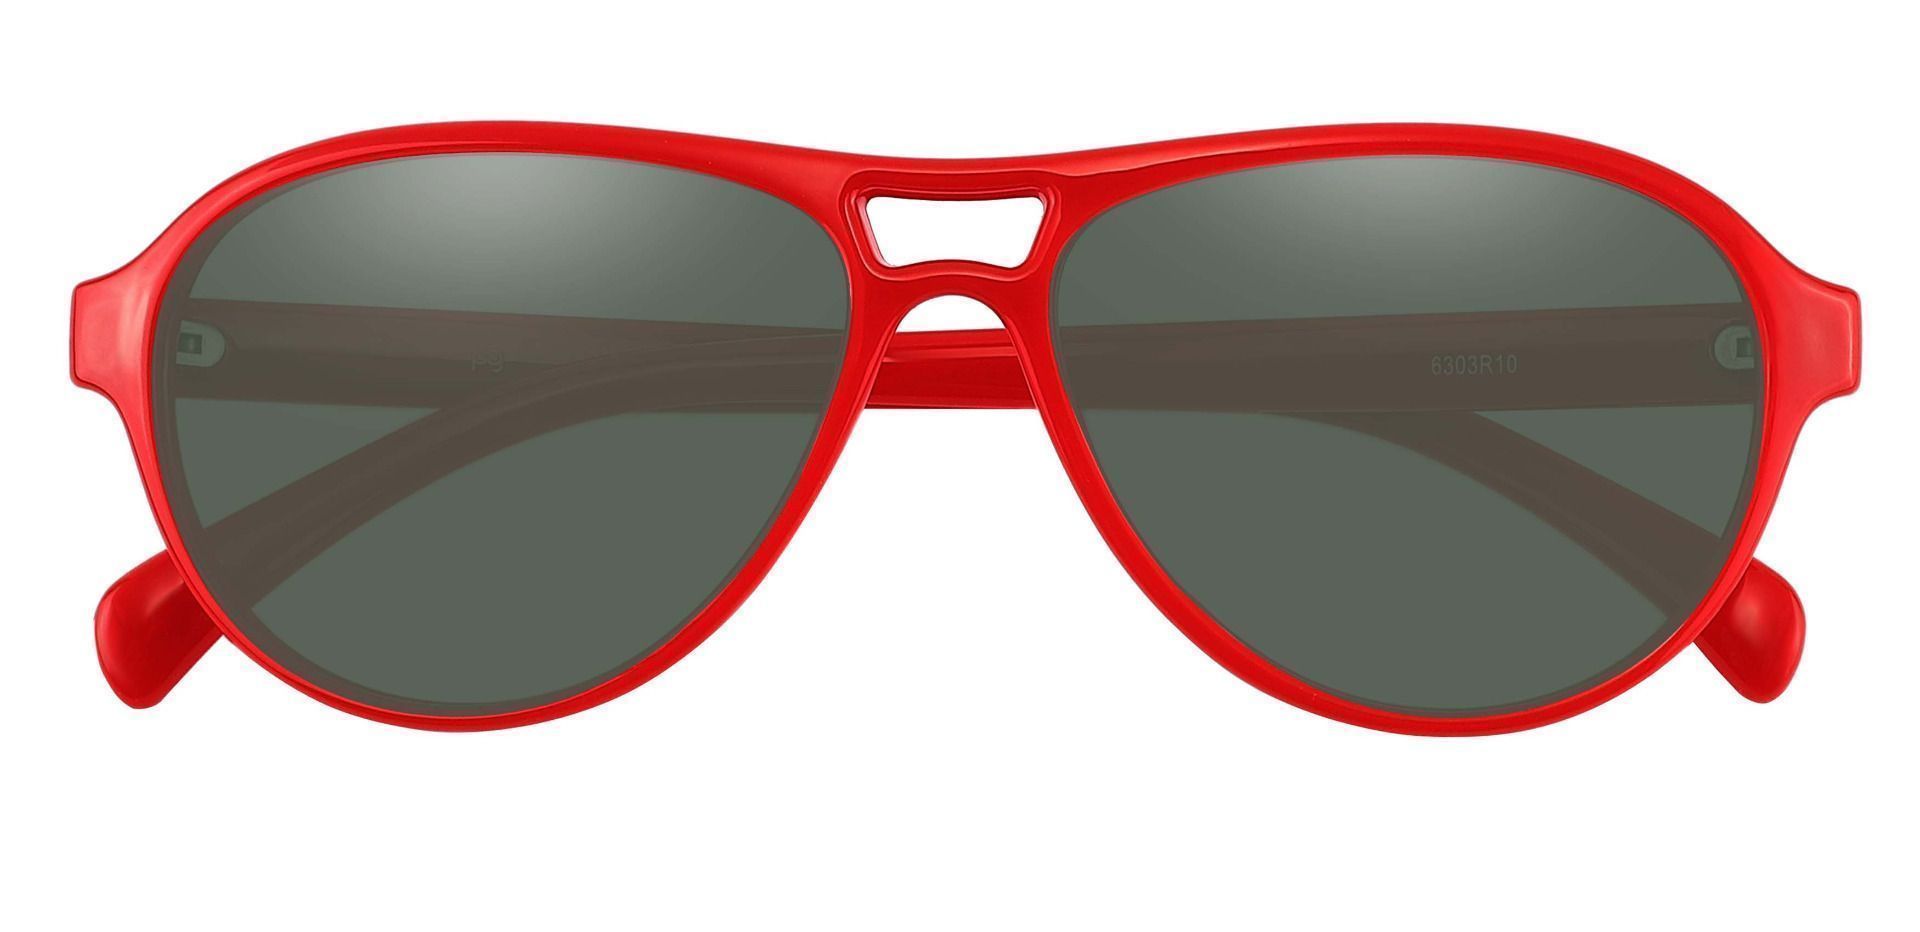 Sosa Aviator Reading Sunglasses - Red Frame With Green Lenses